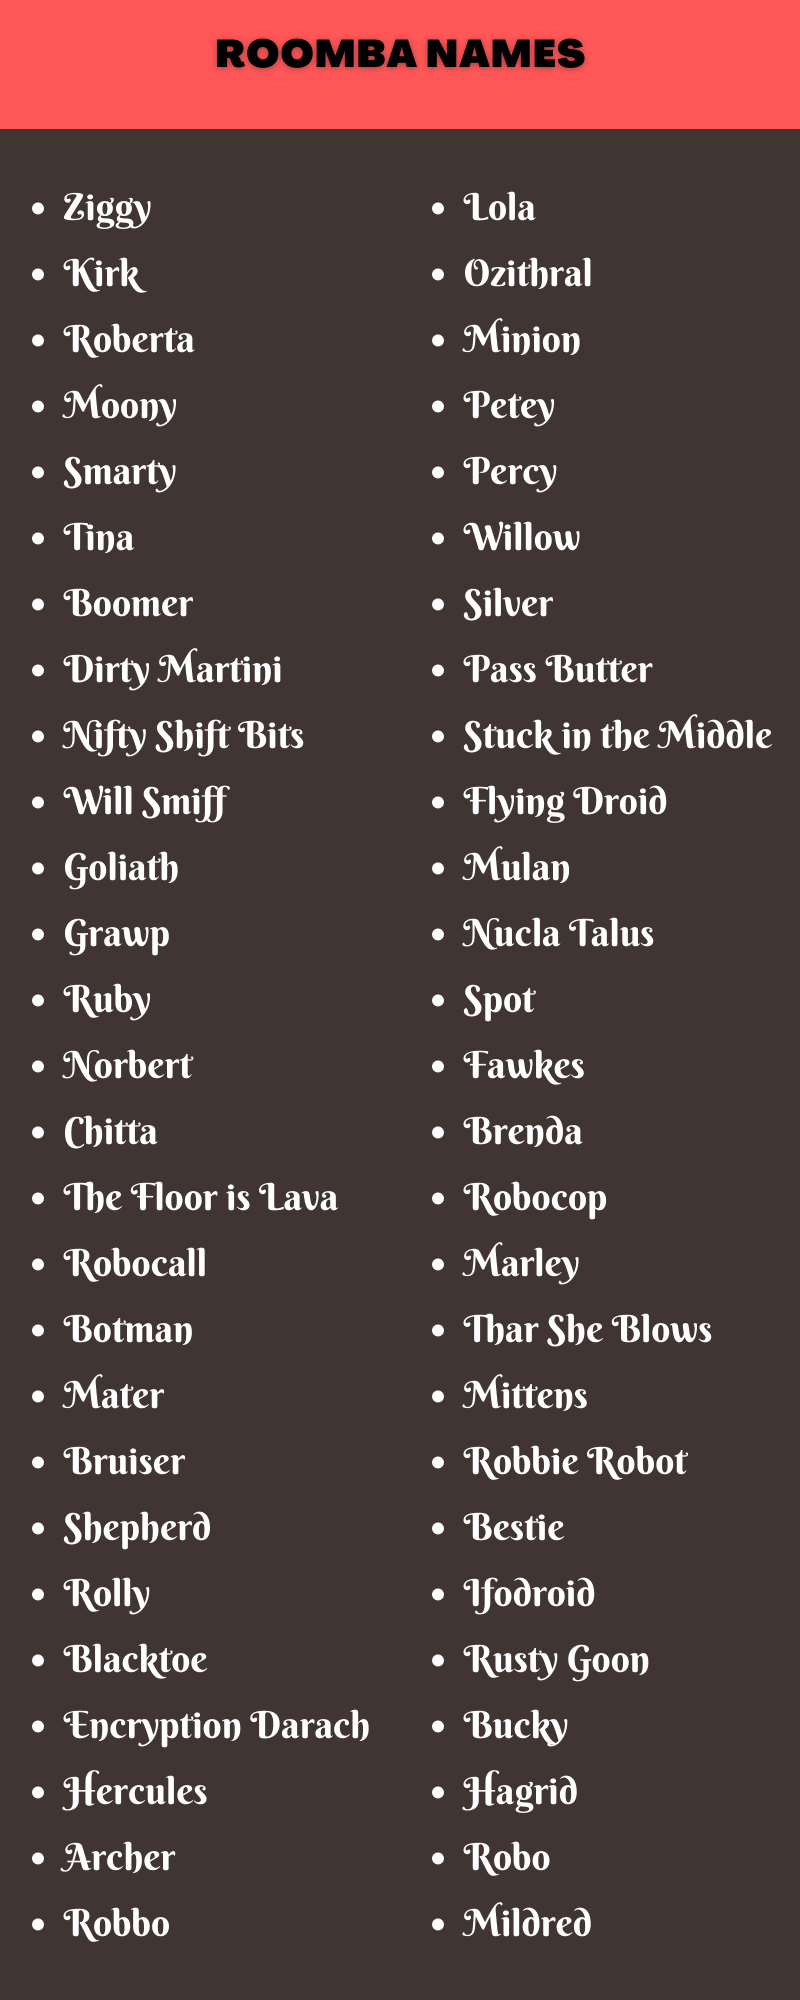 Roomba Names